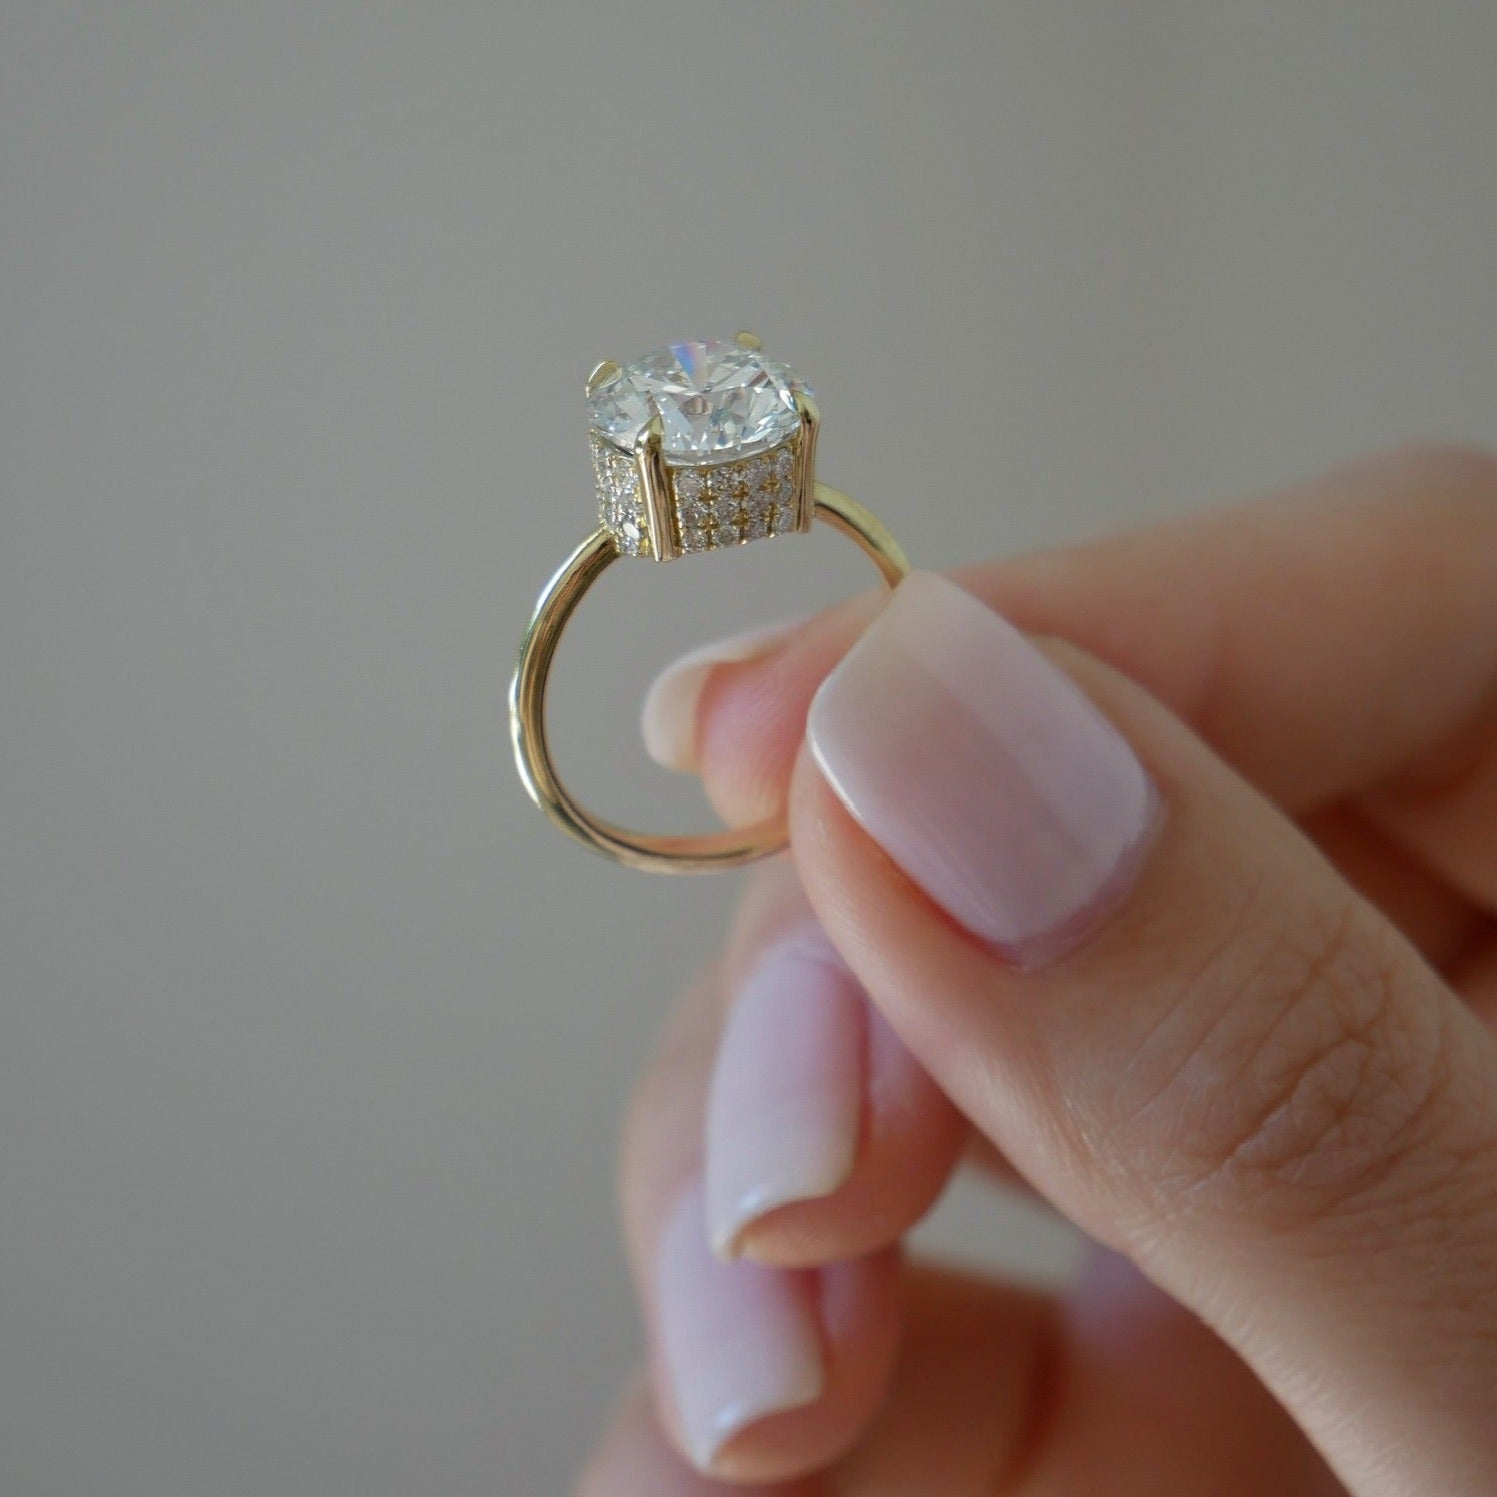 Diamond Engagement Rings NZ, Diamond Rings, Wedding Rings – Walker & Hall